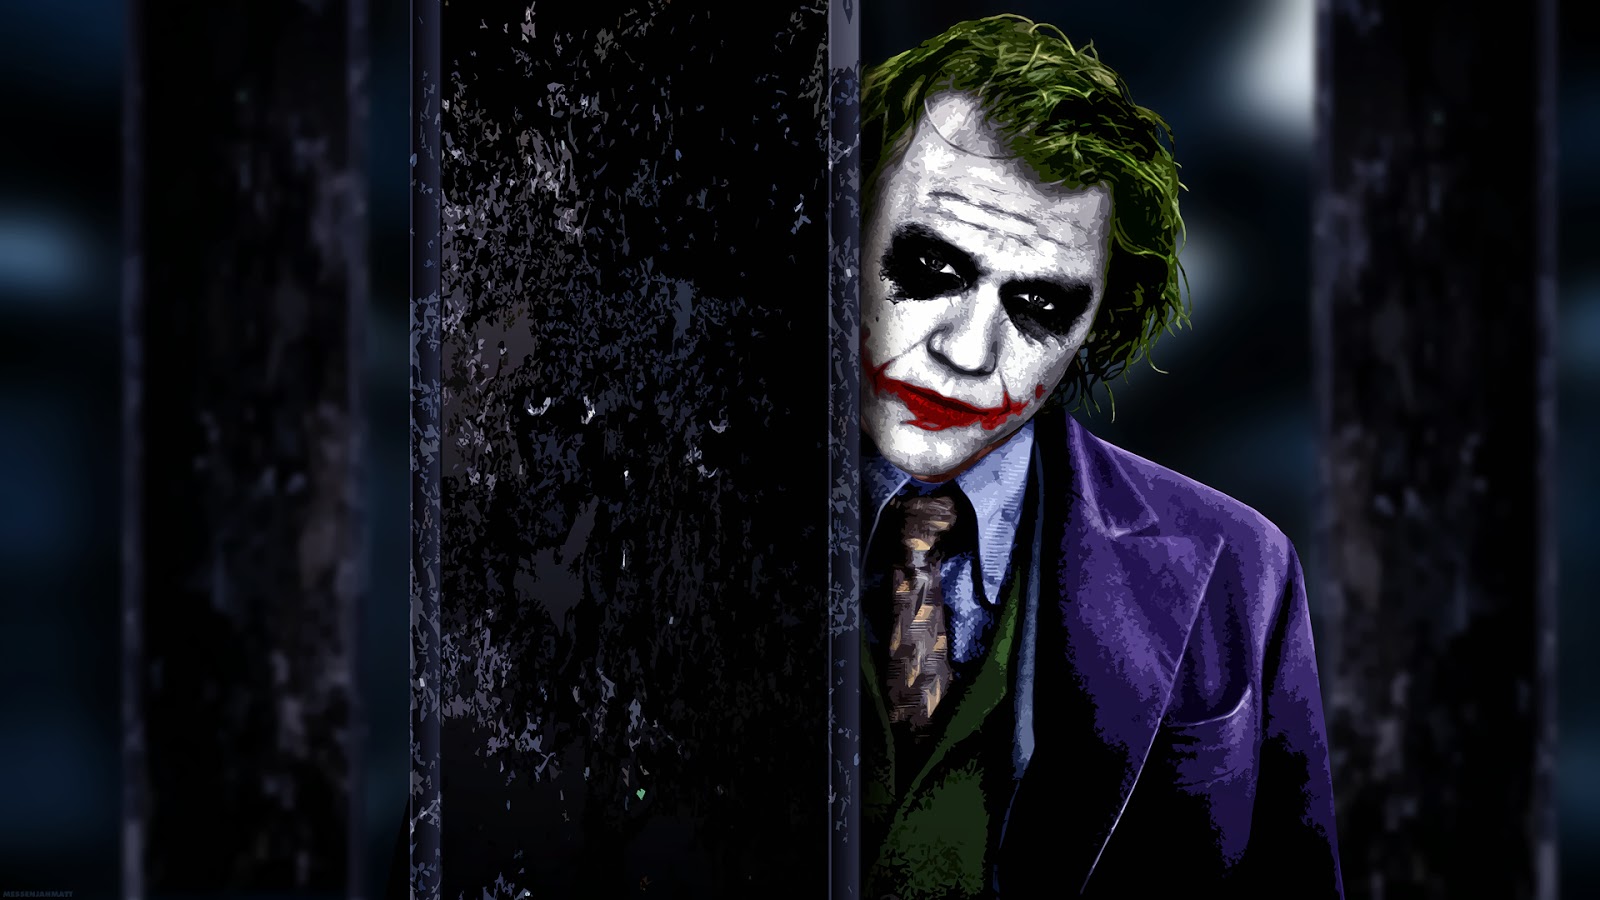 Free download Joker HD Wallpapers joker backgrounds widescreen joker images  [1600x900] for your Desktop, Mobile & Tablet | Explore 48+ The Joker HD  Wallpaper | Joker Hd Wallpaper, The Joker Wallpapers, The